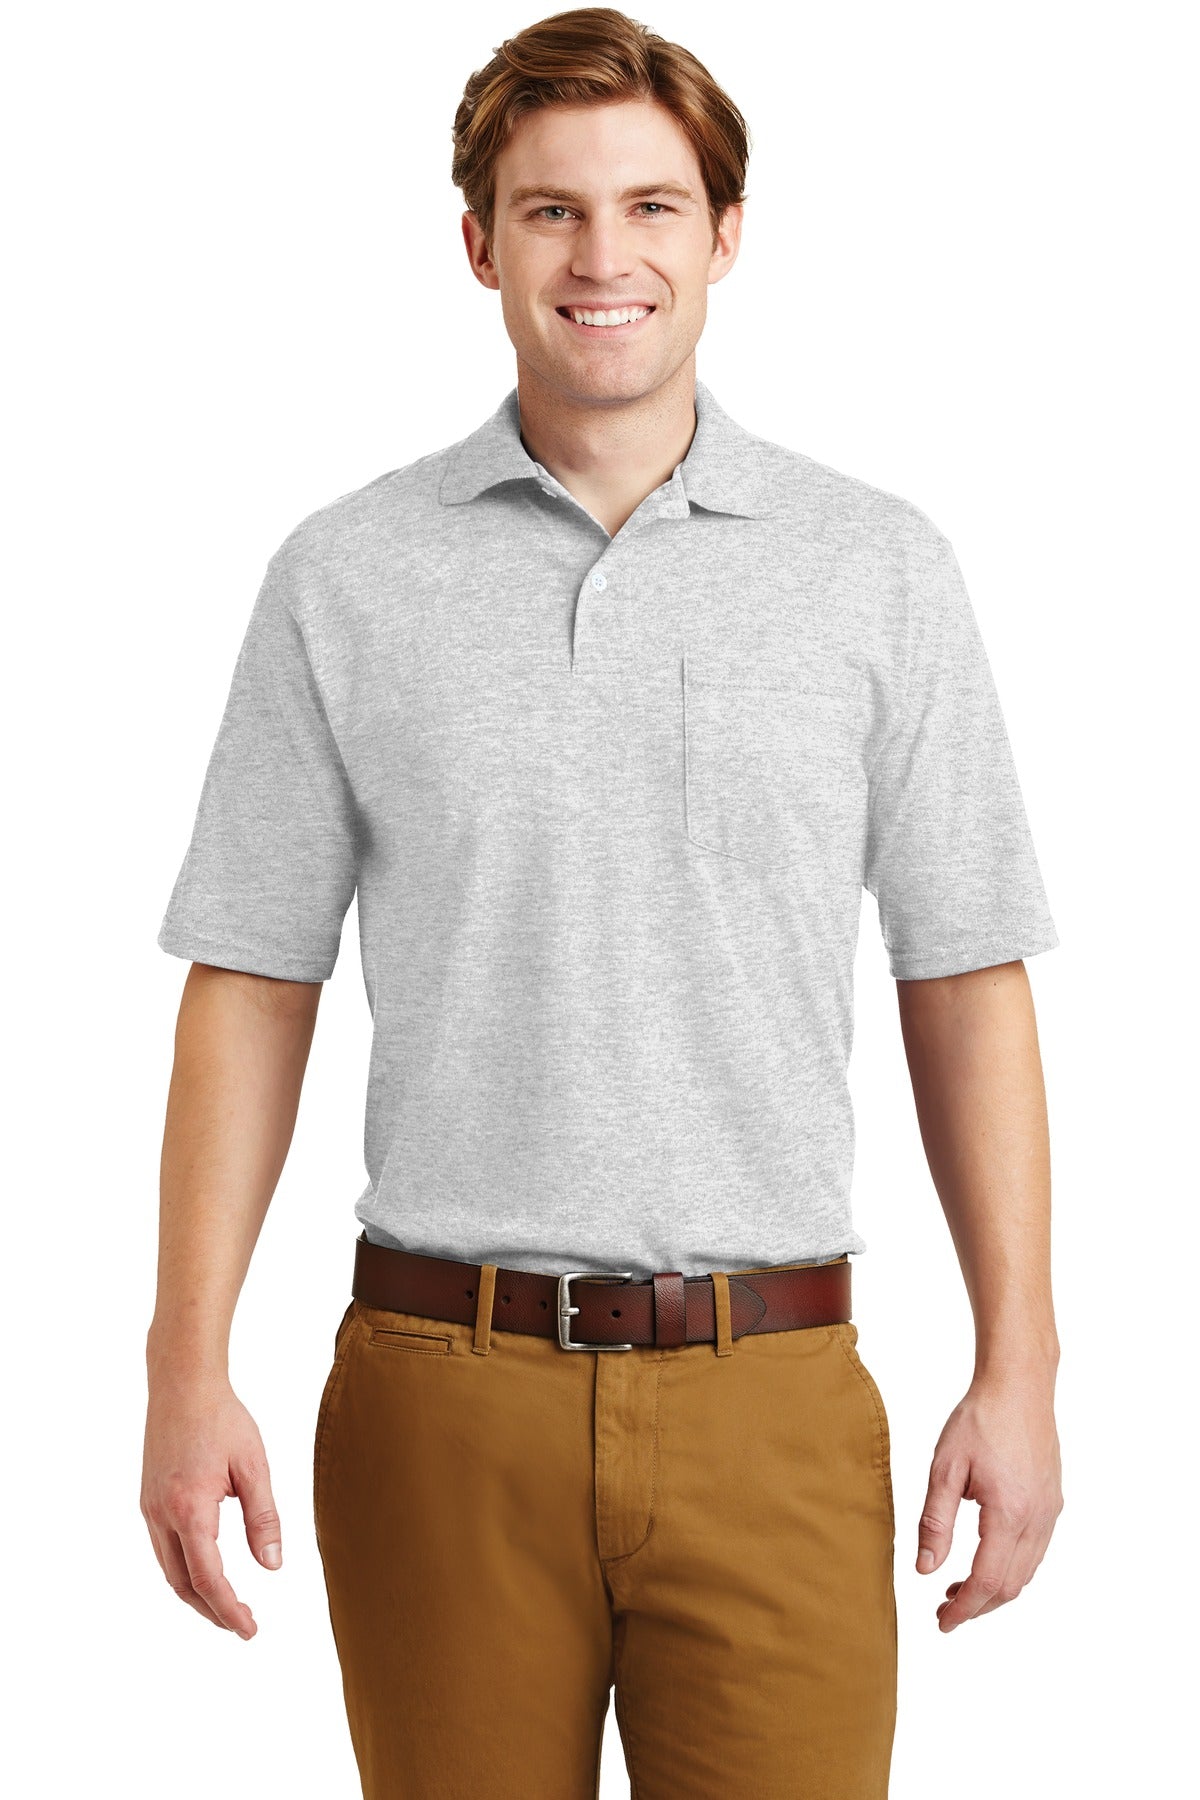 Jerzees® -SpotShield™ 5.4-Ounce Jersey Knit Sport Shirt with Pocket. 436MP